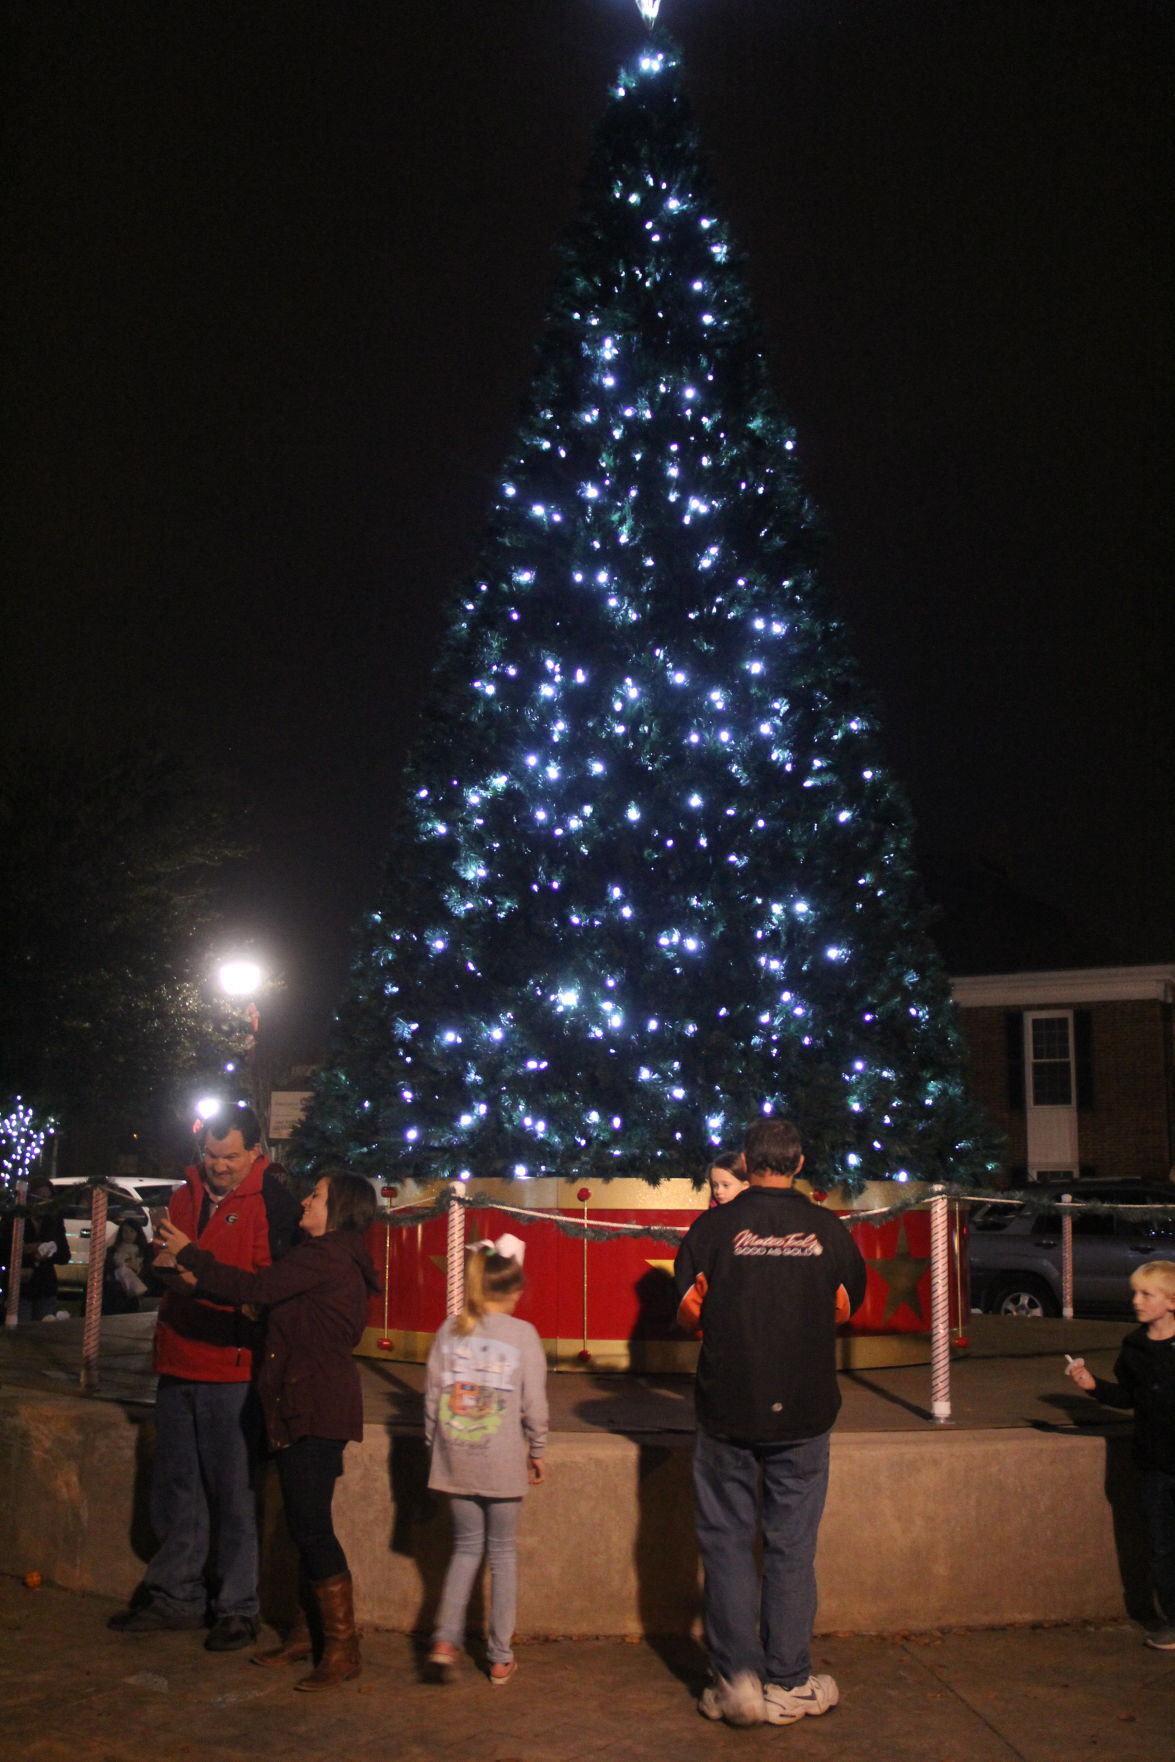 The tree lighting ceremony at bradley fair